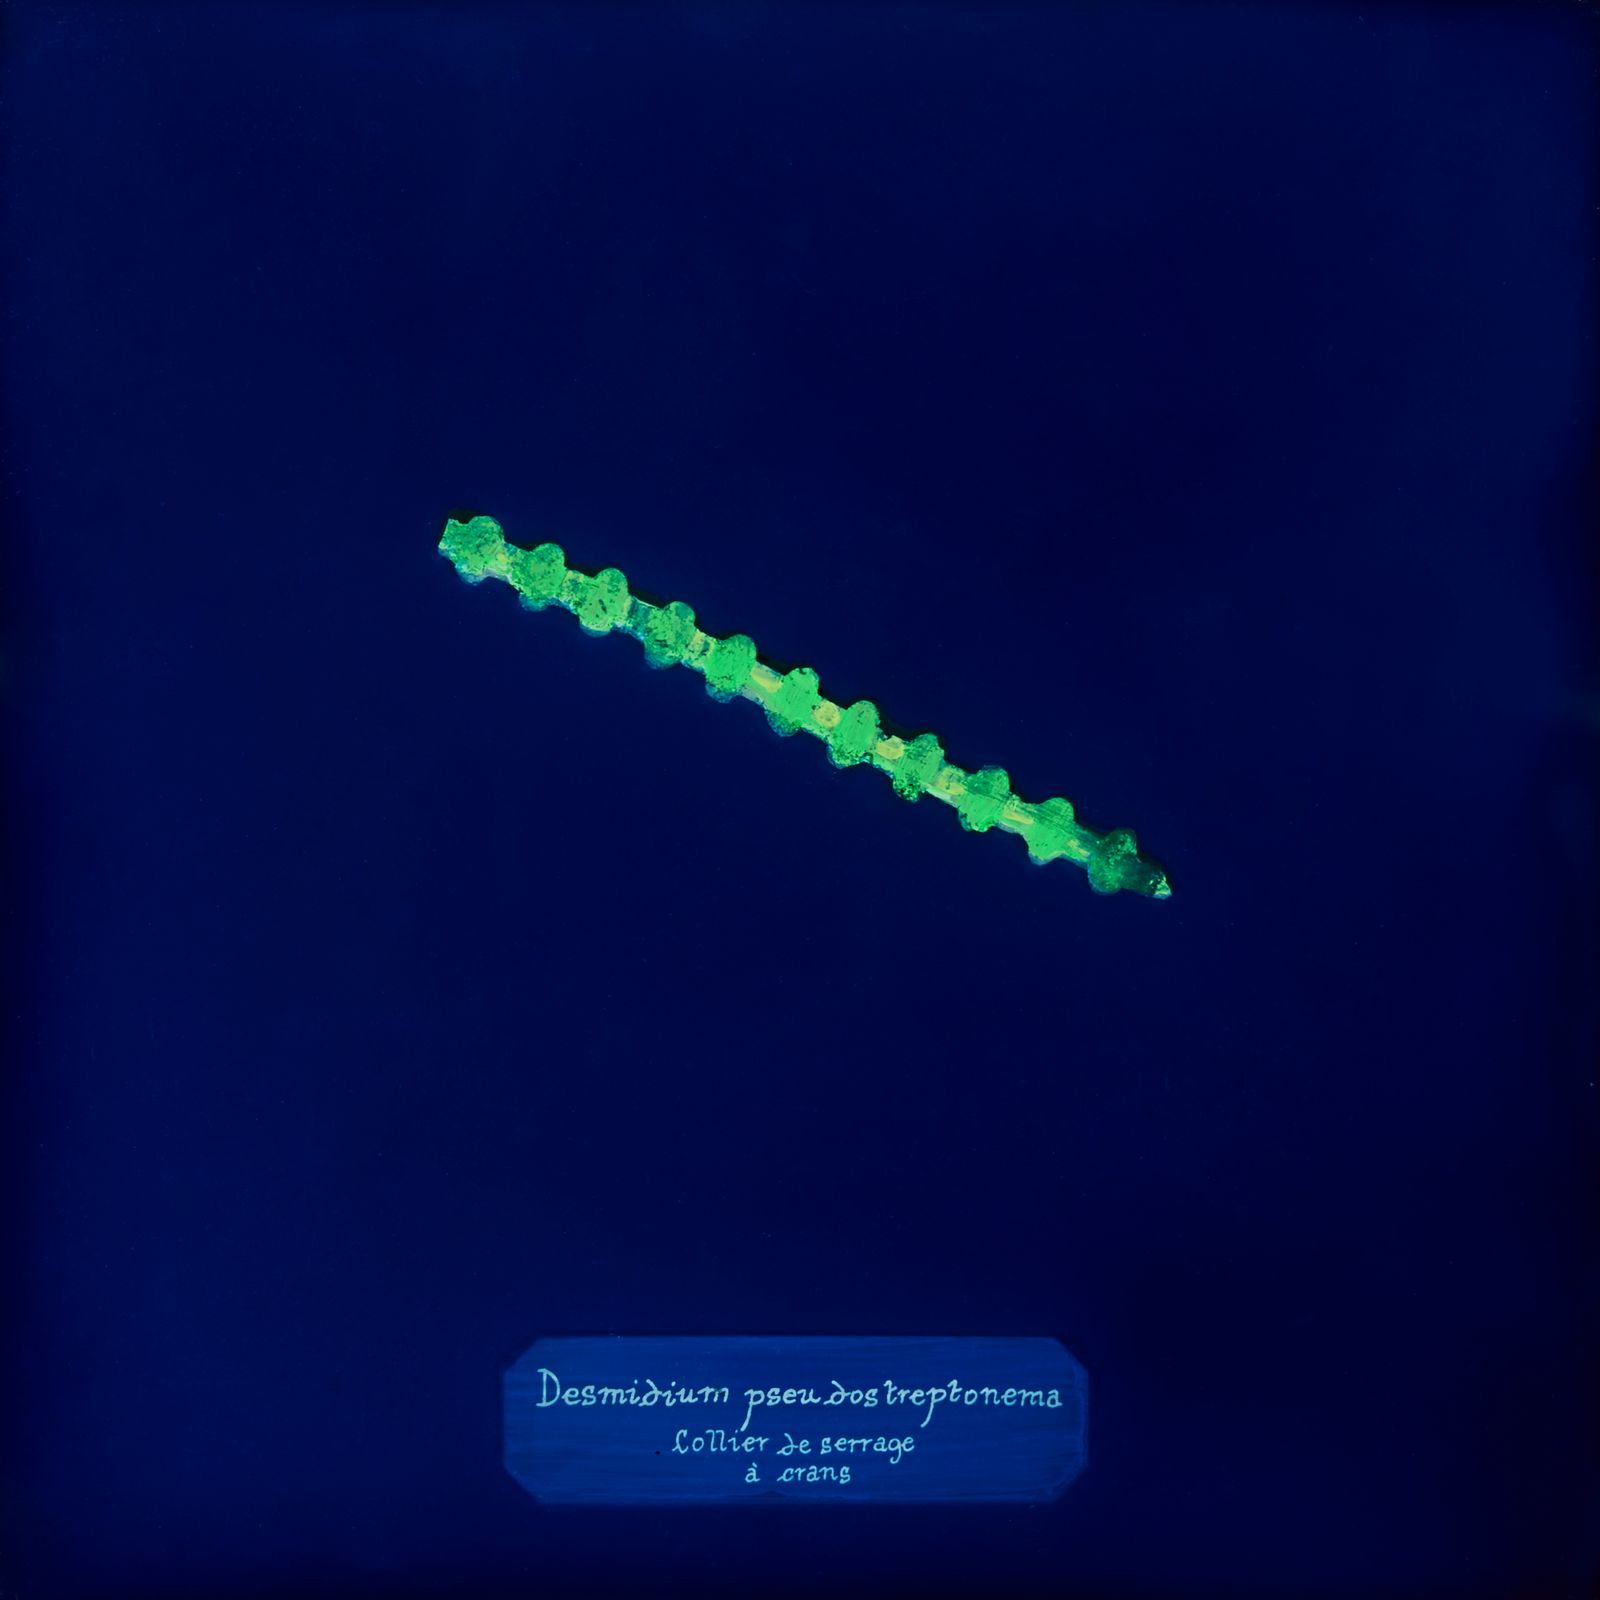 © Manon Lanjouère - Desmidium pseudostreptonema, Clamping collar, Cyanotype on glass and fluorescent vynil emulsion, 20x20 cm